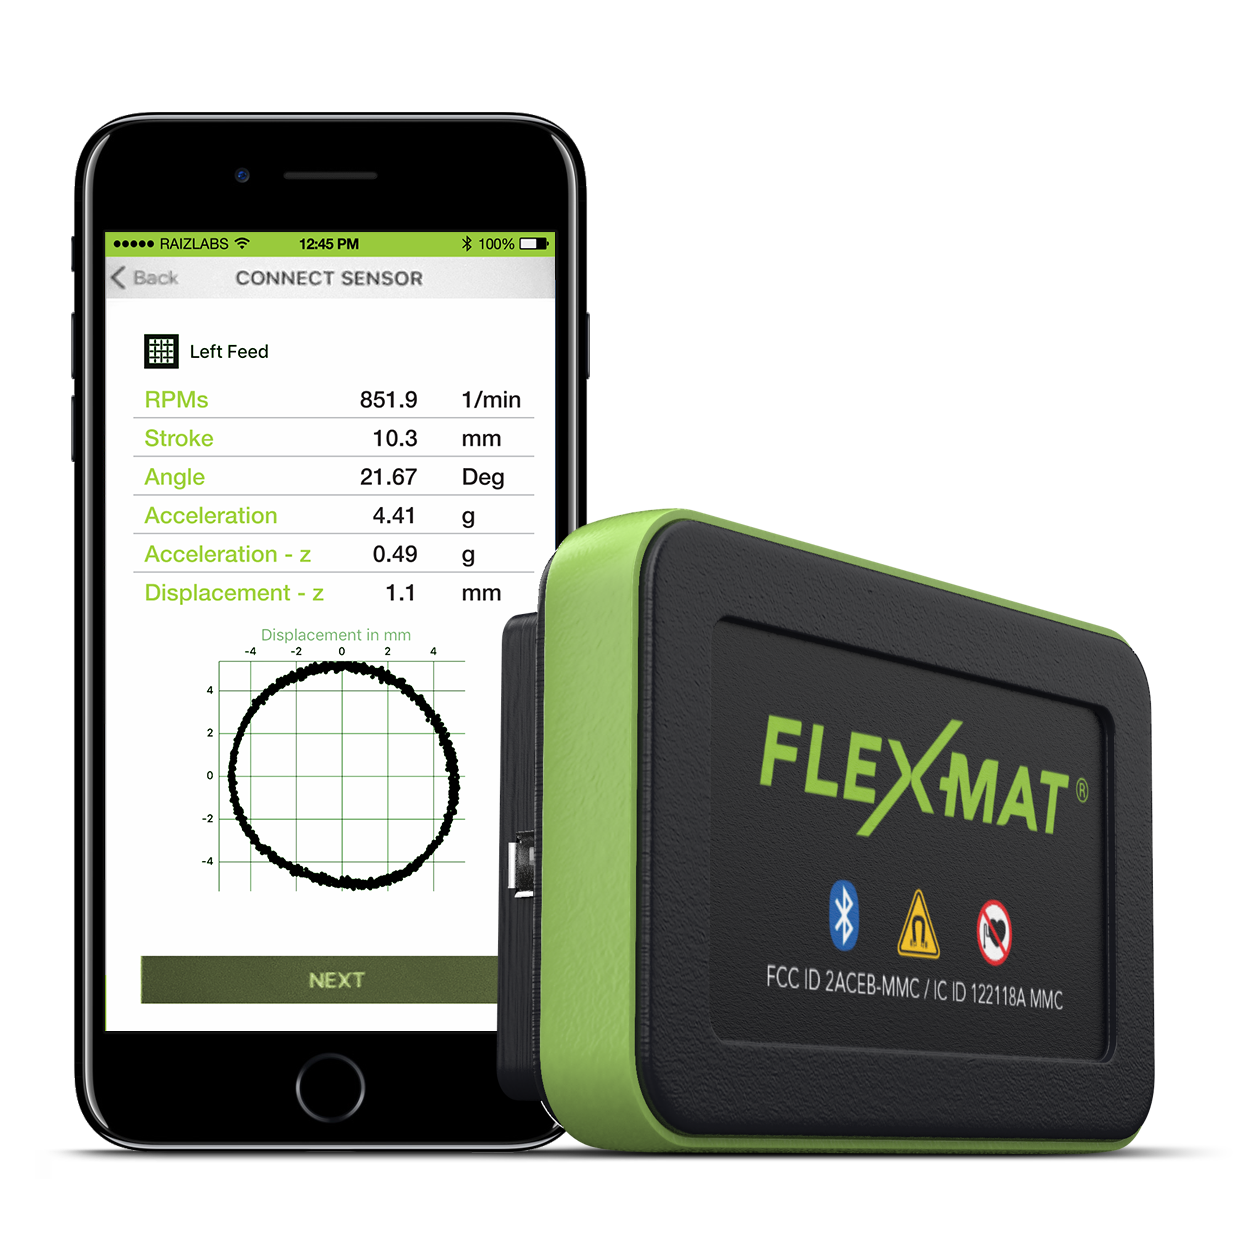 FLEX-MAT Sensor. App-controlled vibration analysis